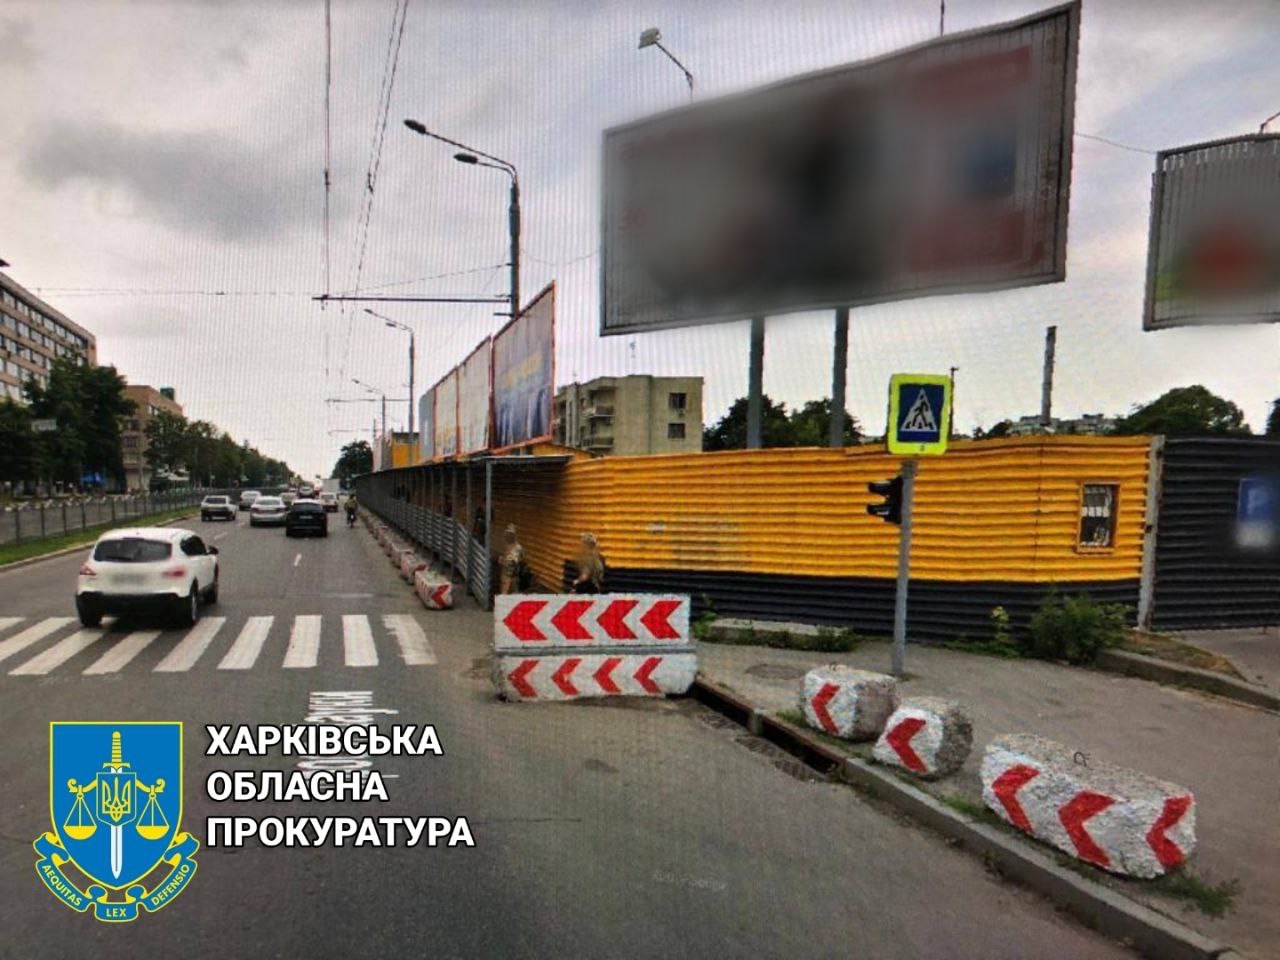 Забор вместо тротуара в центре Харькова: суд поставил точку в деле